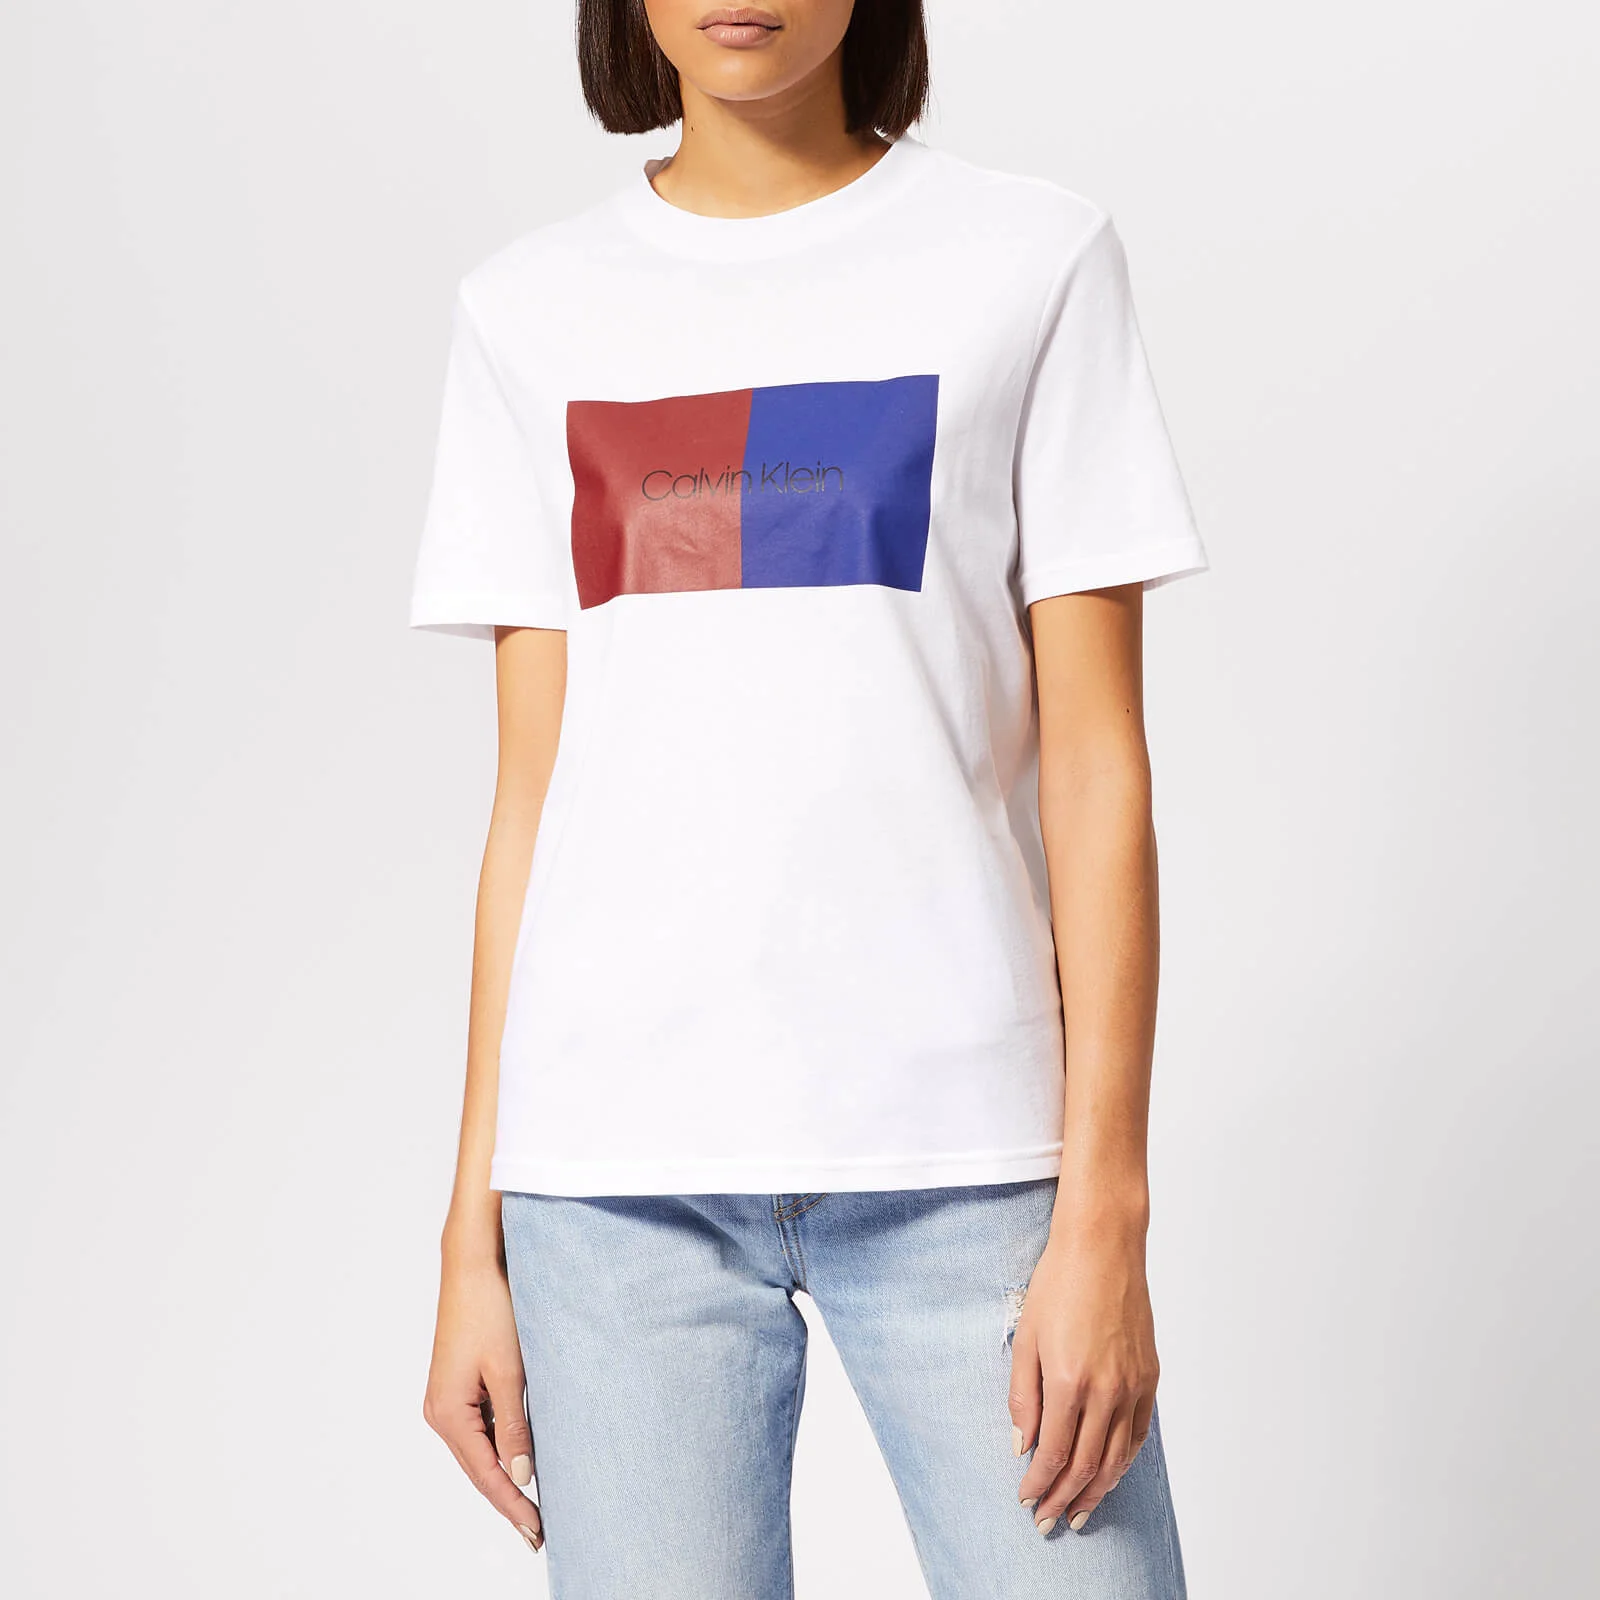 Calvin Klein Women's Duo Print T-Shirt - White Image 1